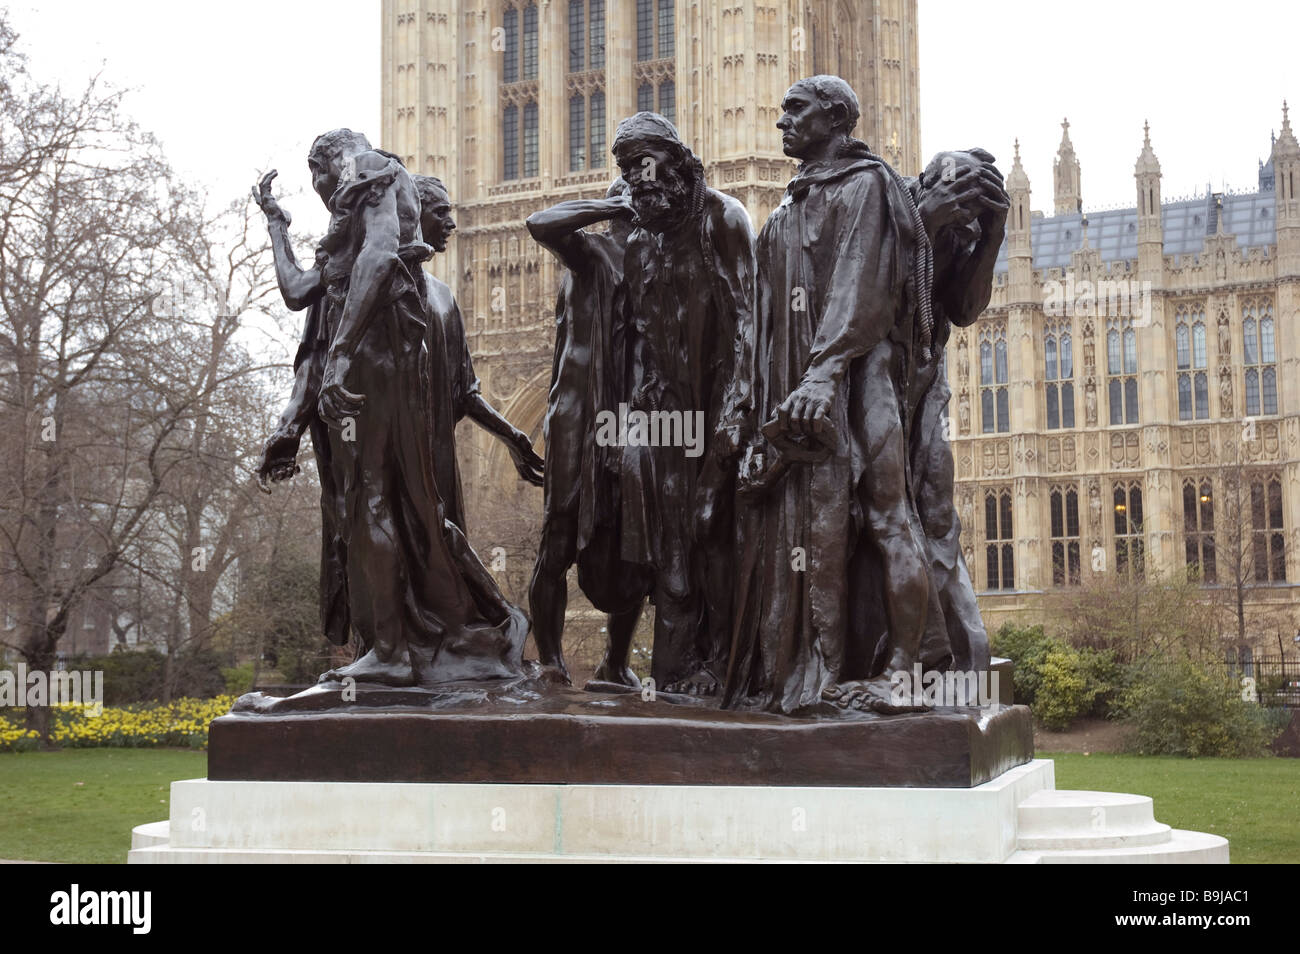 Las HAMBURGUESAS DE CALAIS POR AGUSTE Rodin en un parque cerca del Parlamento de Londres Foto de stock